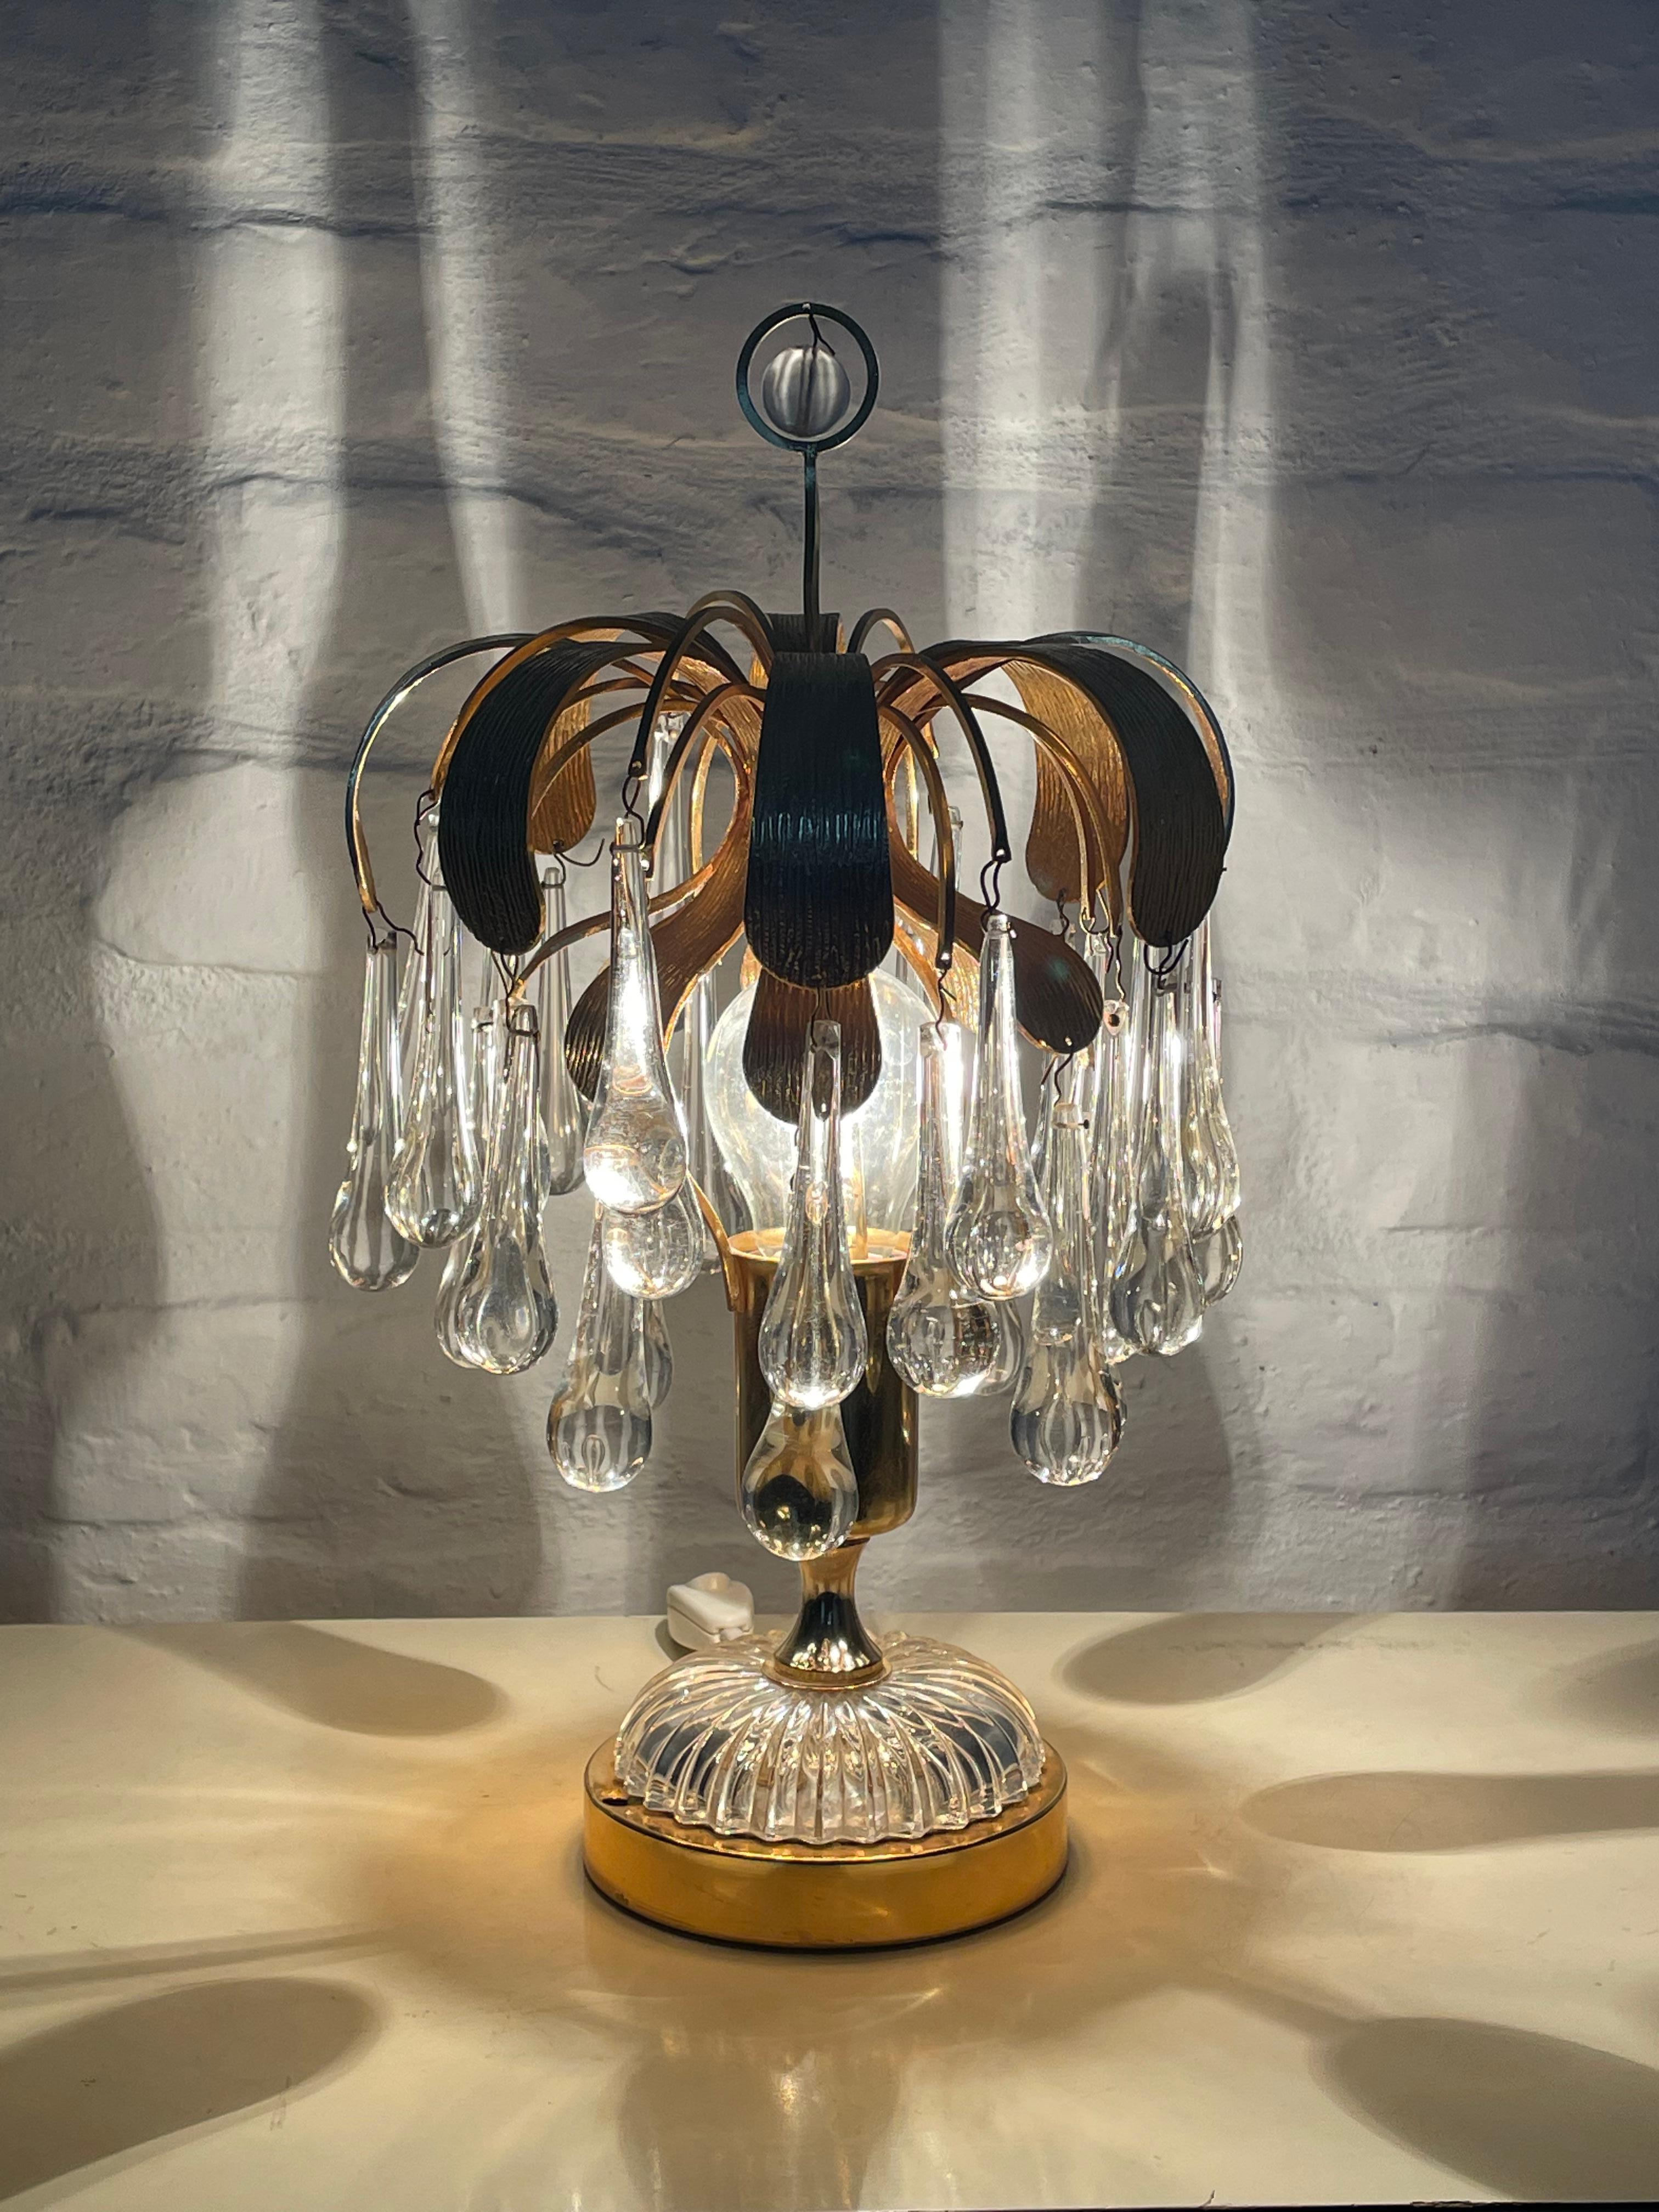 Hollywood Regency Vintage Regency Table Lamp  Model S-1350 T by Palwa Germany